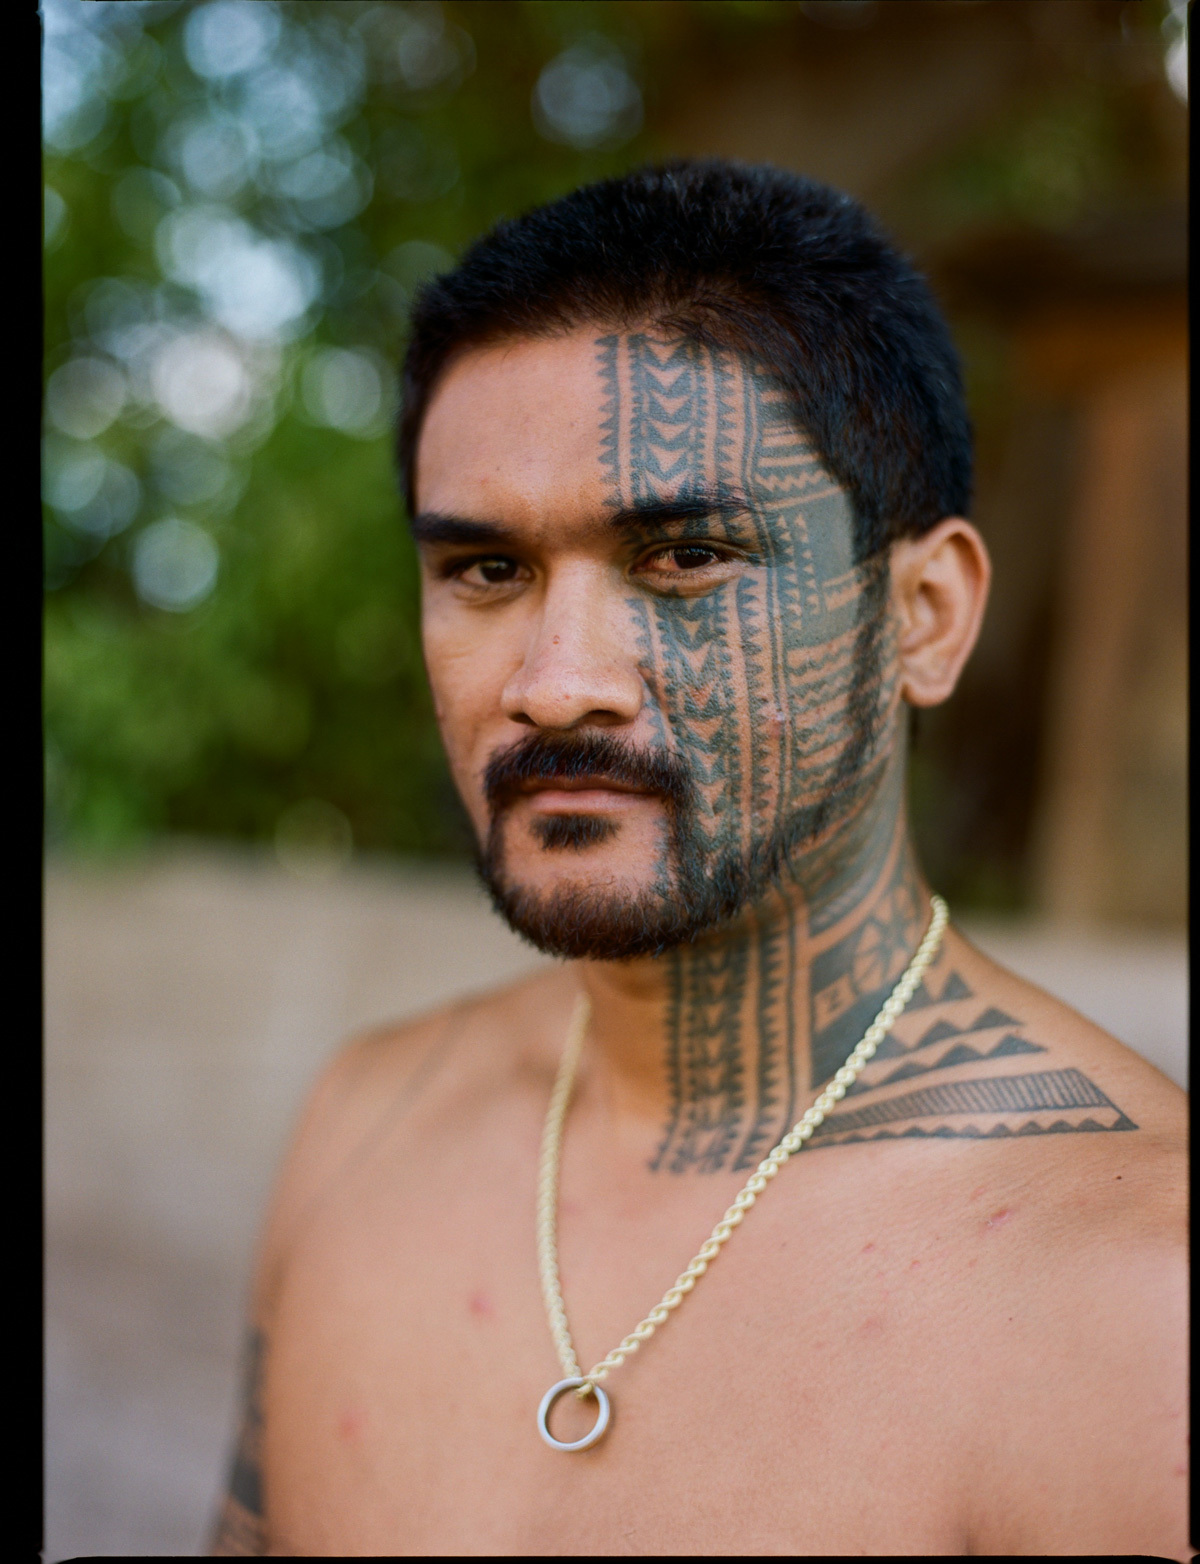 Maui Temporary Tattoos  Maui Henna Artists  Hawaiian face tattoo or Moko   Facebook